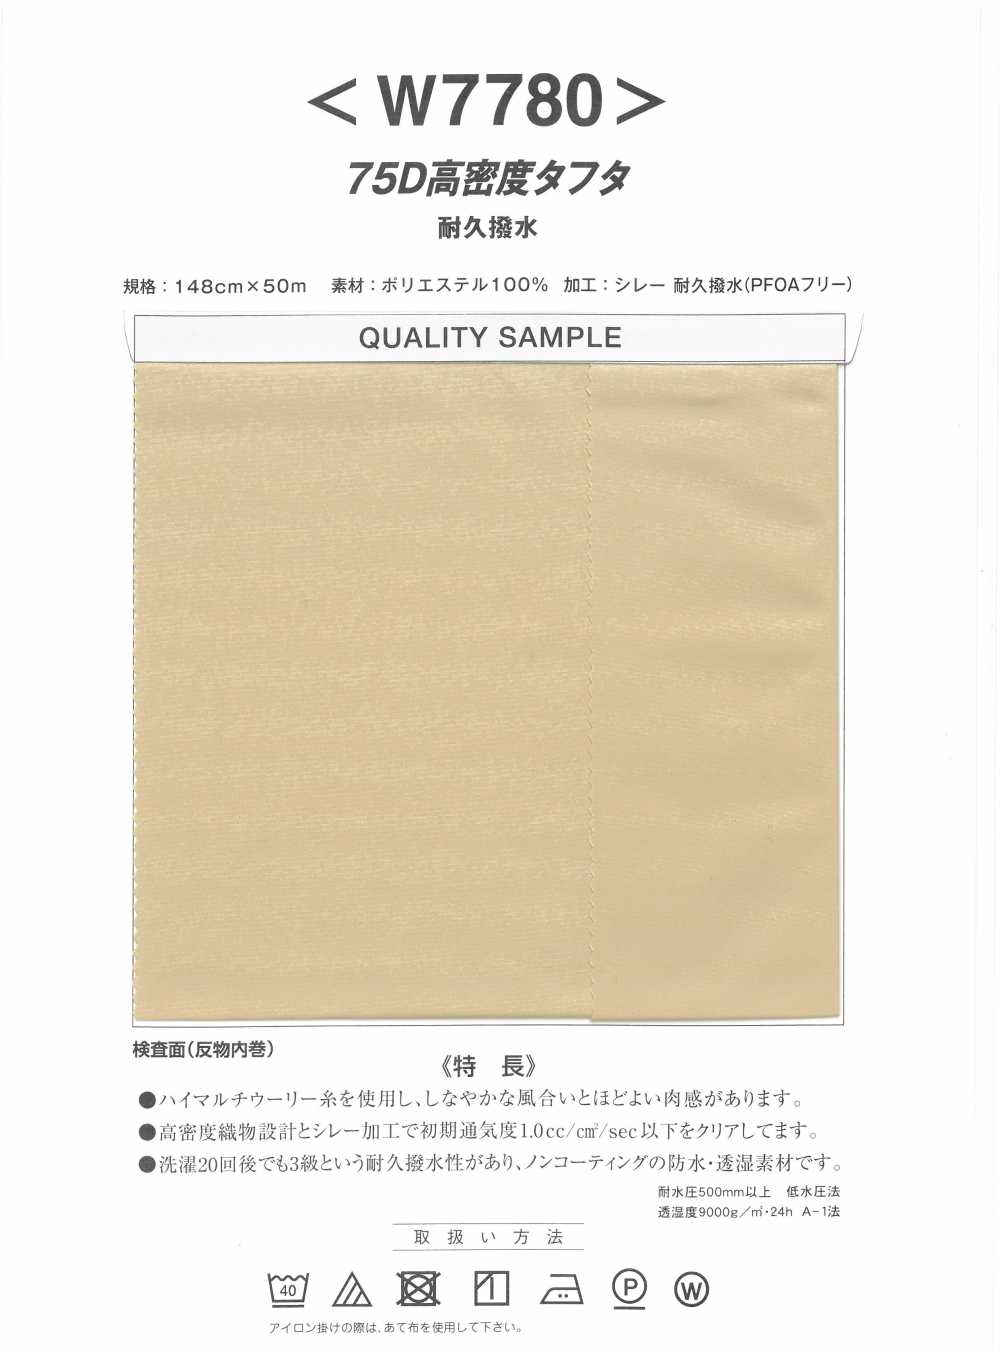 W7780 75D High Density Taffeta[Textile] Nishiyama